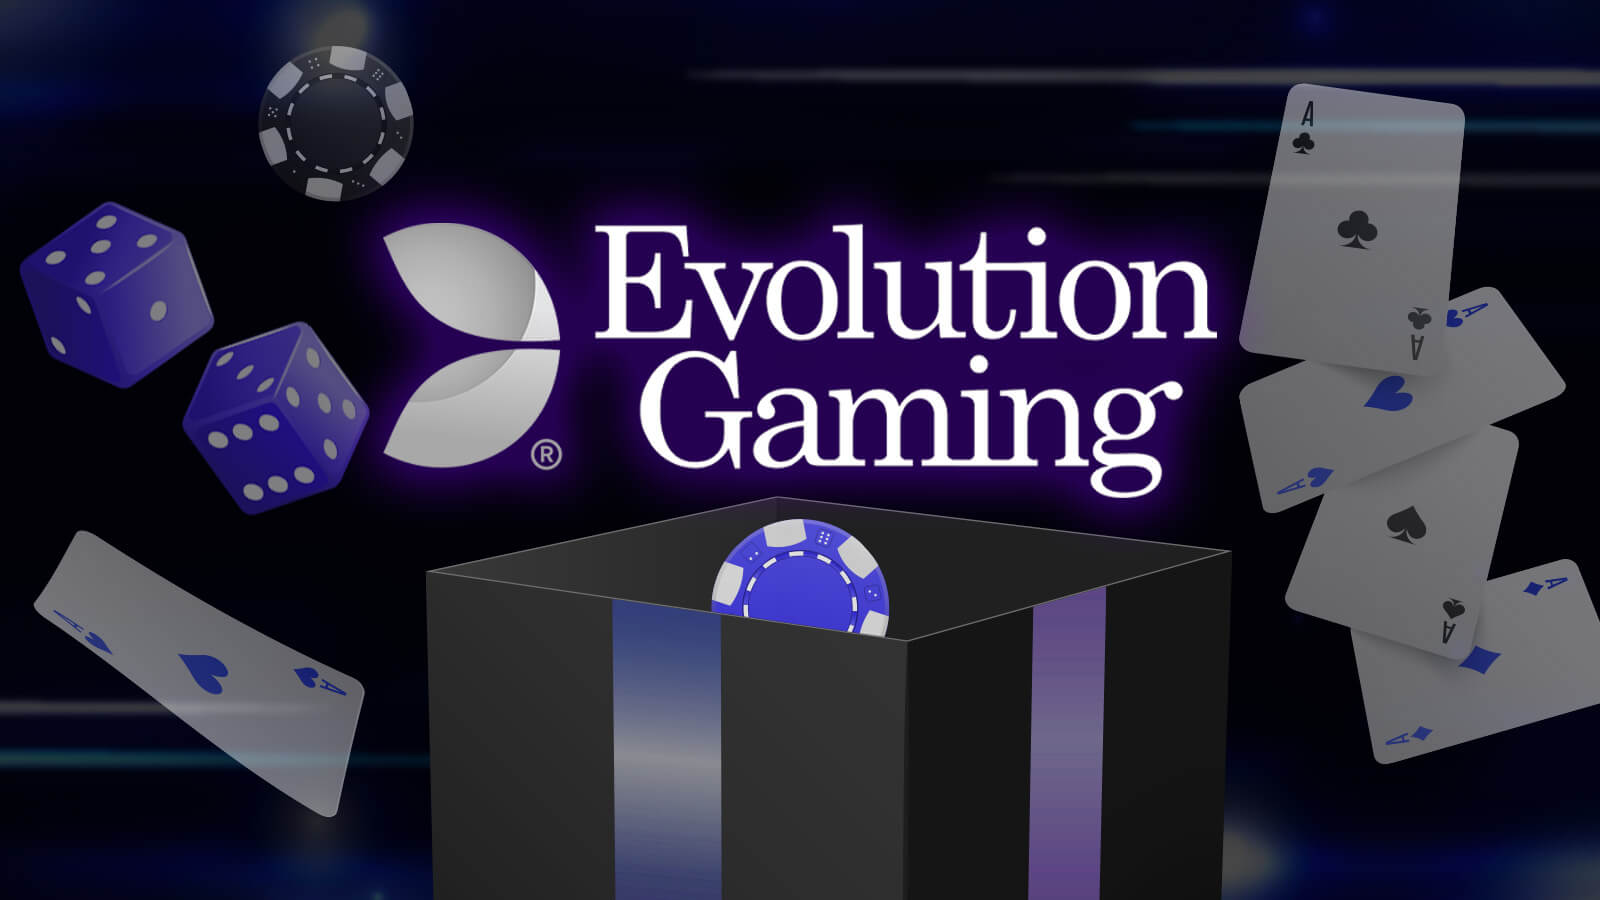 Casino Bonuses with an Evolution Twist